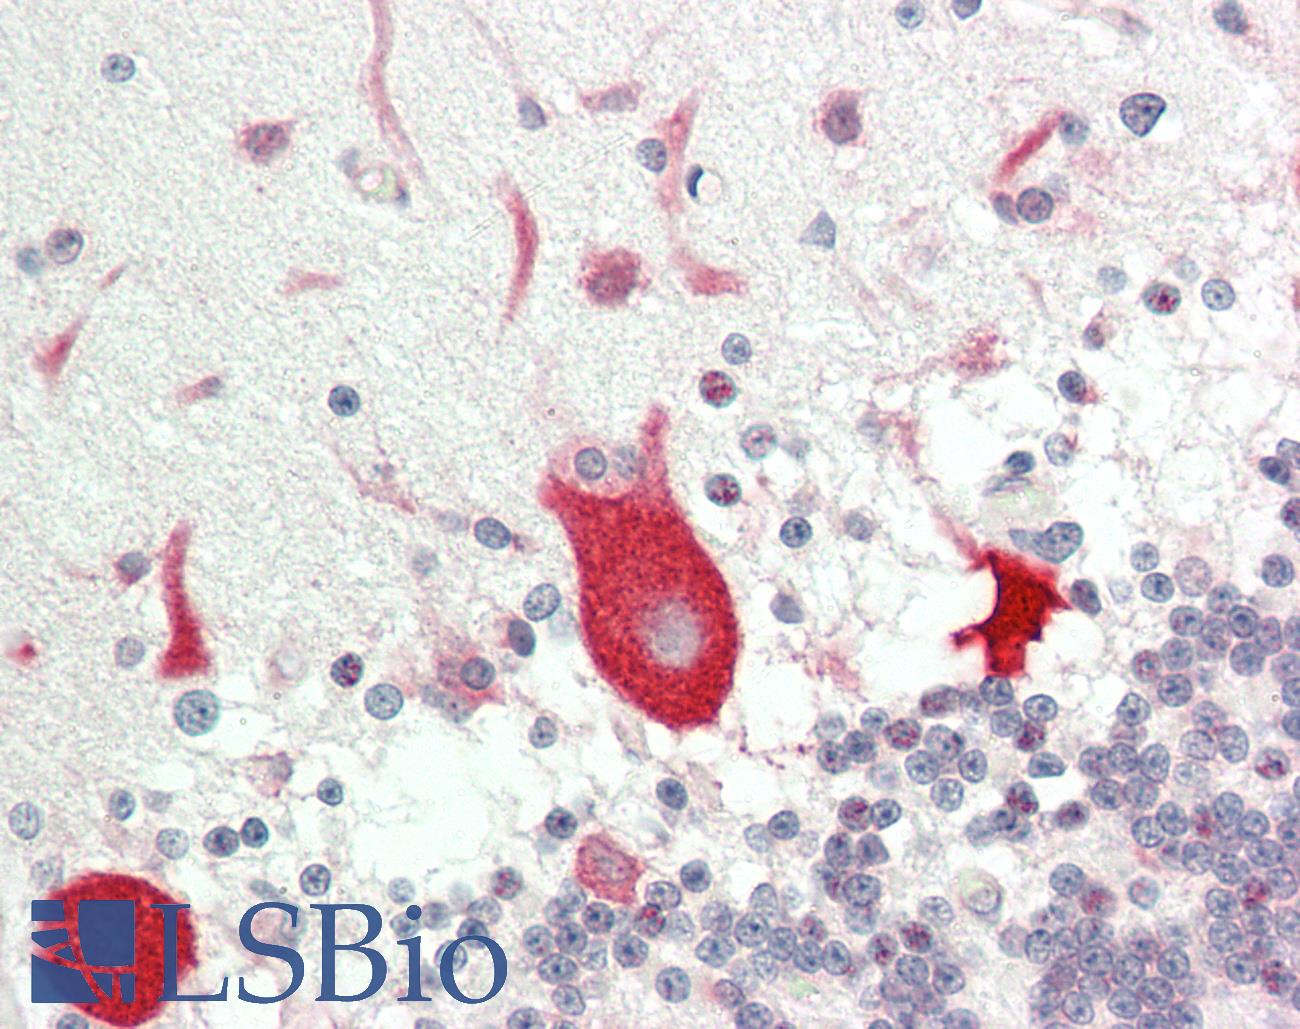 EF1G / EEF1G Antibody - Human Brain, Cerebellum: Formalin-Fixed, Paraffin-Embedded (FFPE)